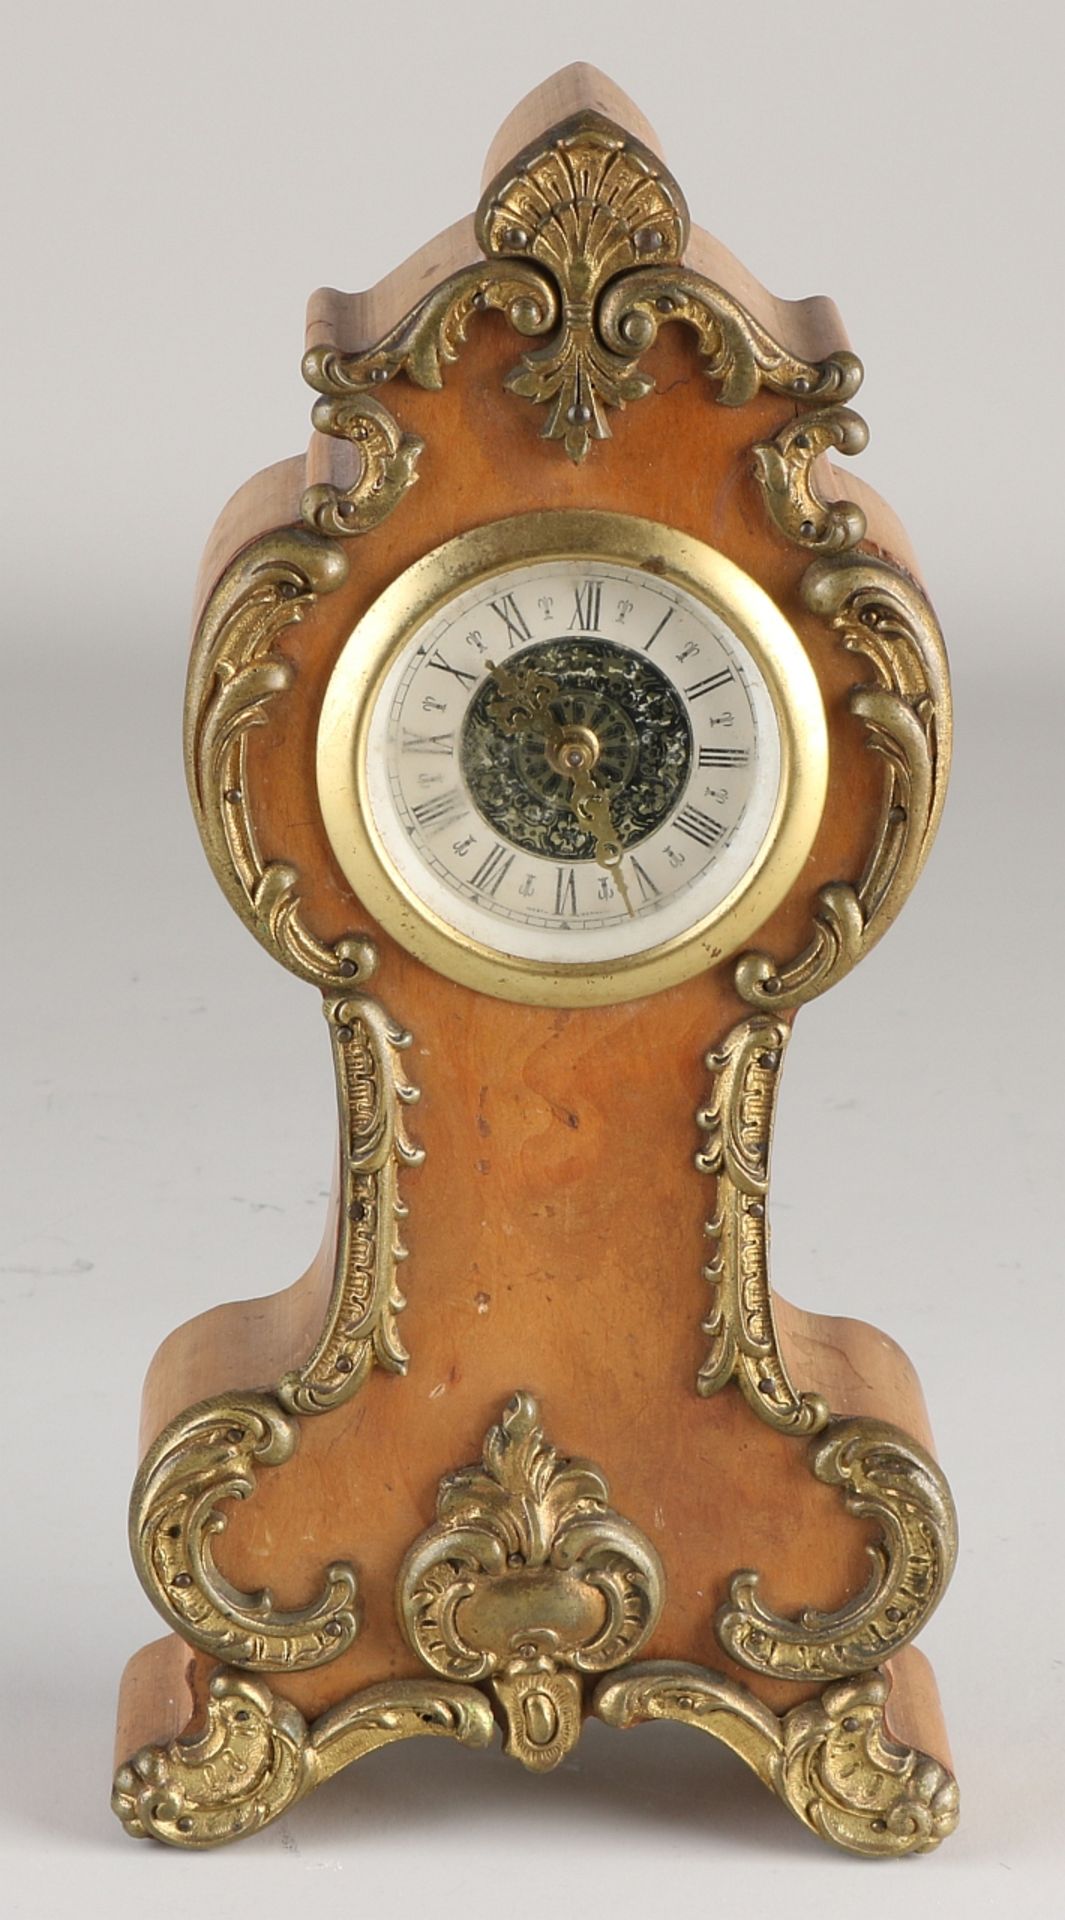 Jura clock with brass fittings